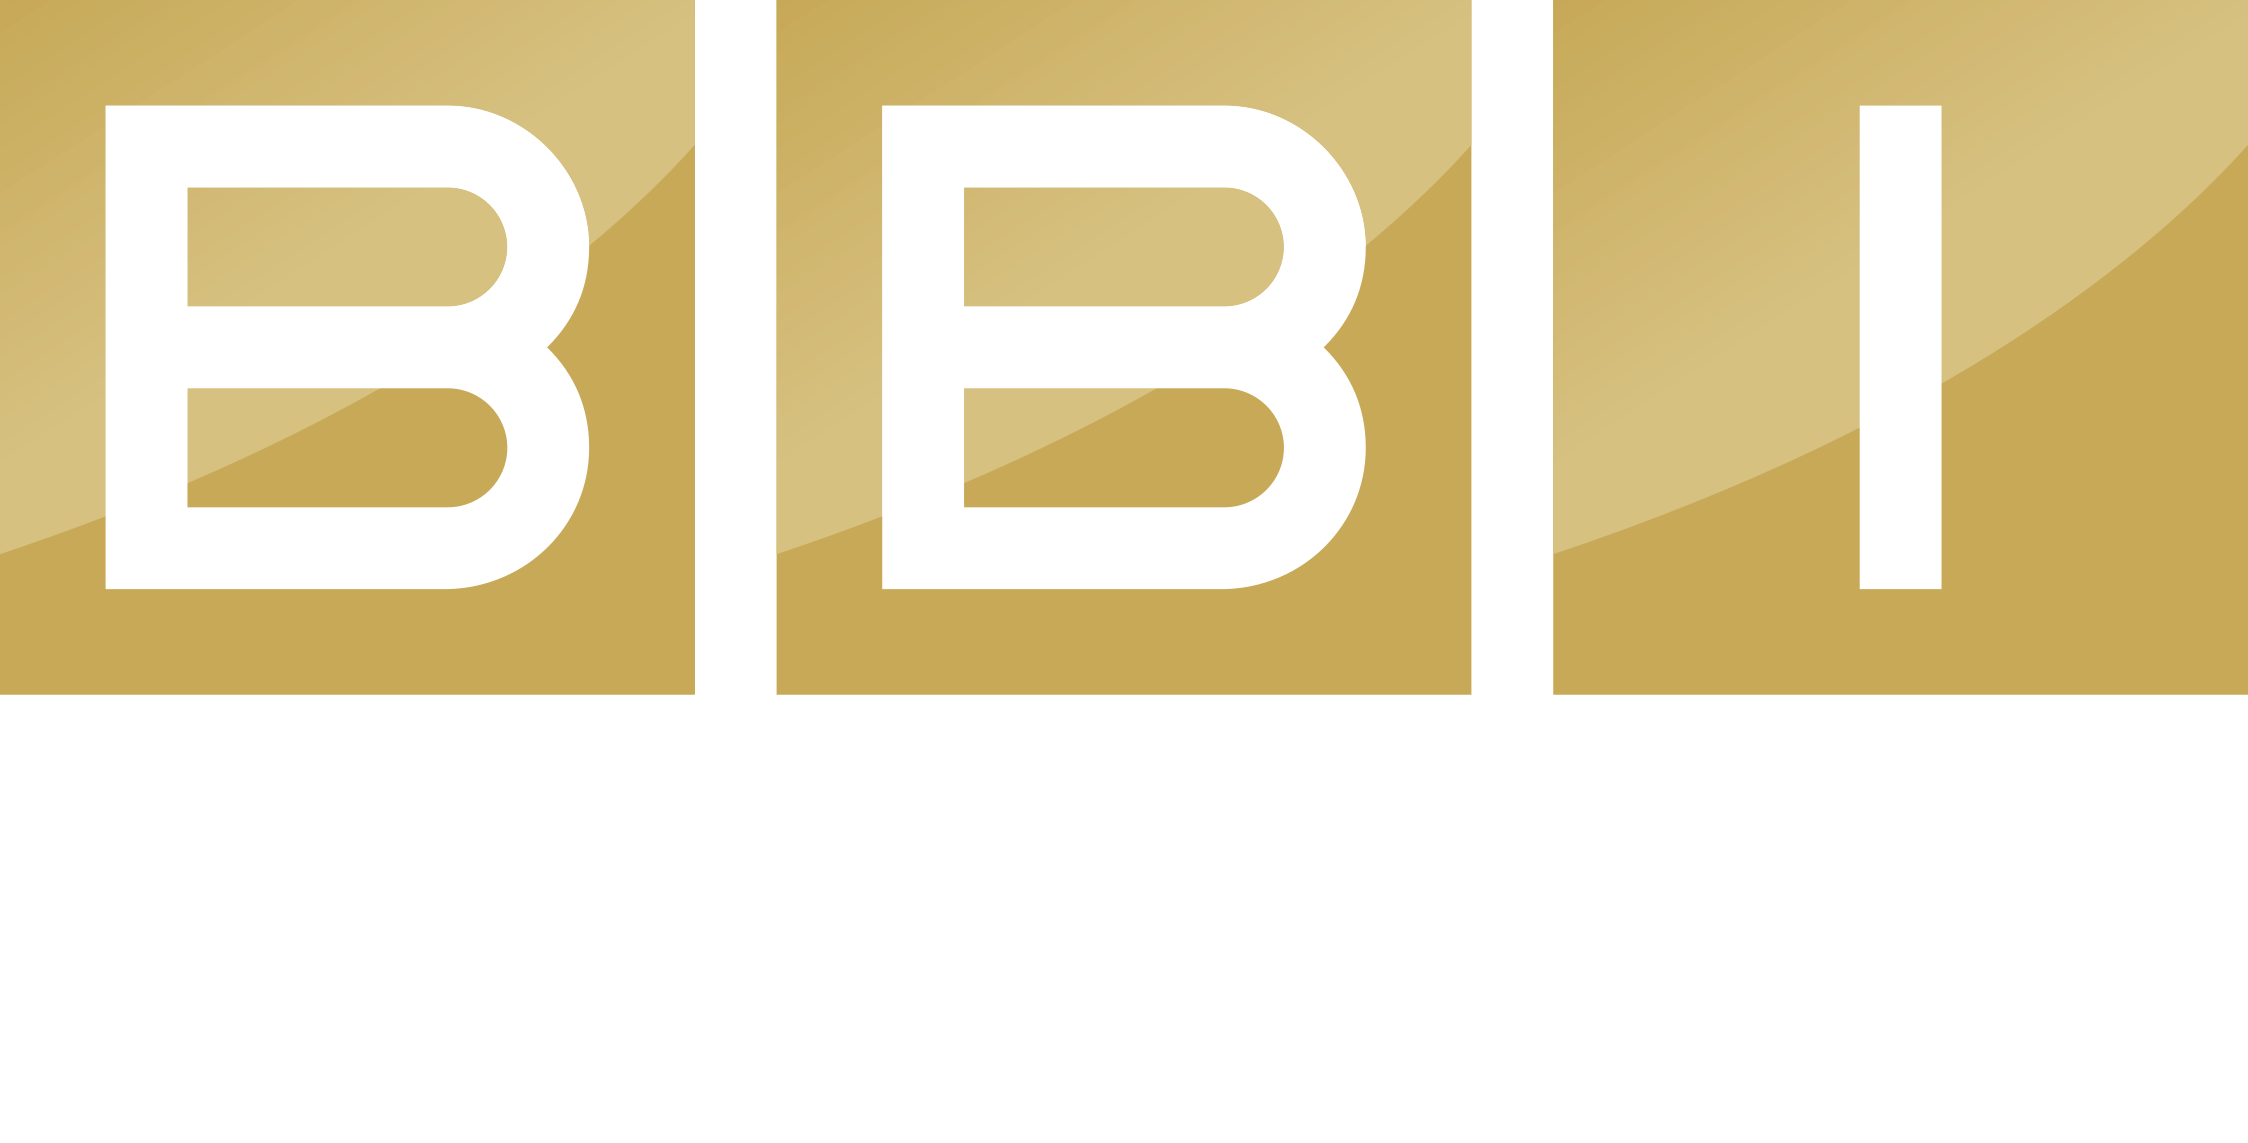 Business Broker Investerix 